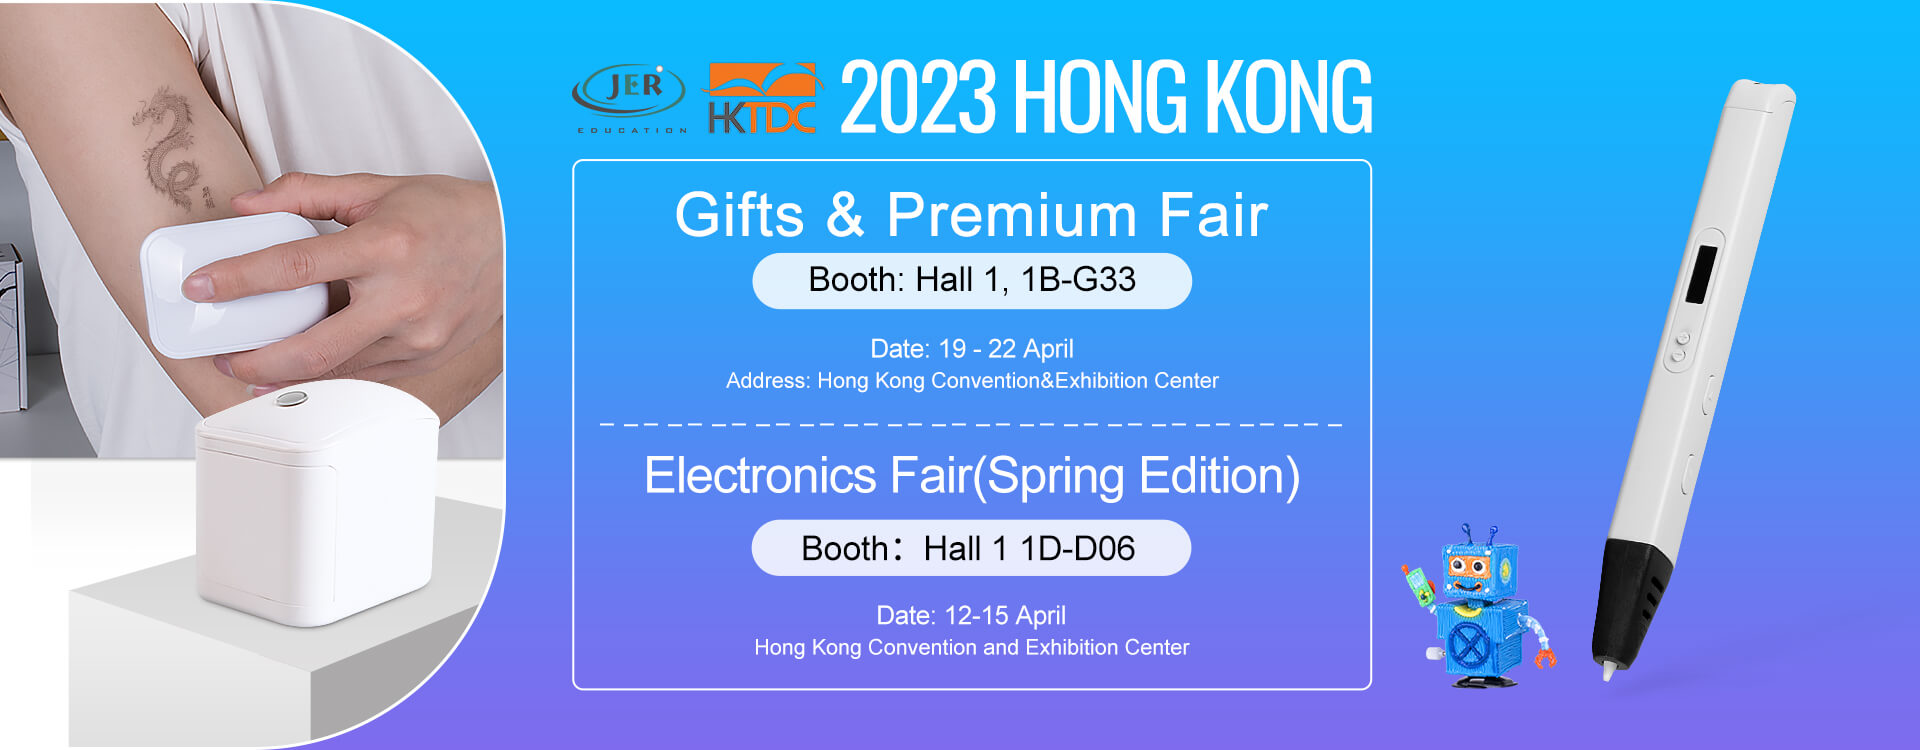 JER Education welcomes you to 2023 Hong Kong Electronics Fair 